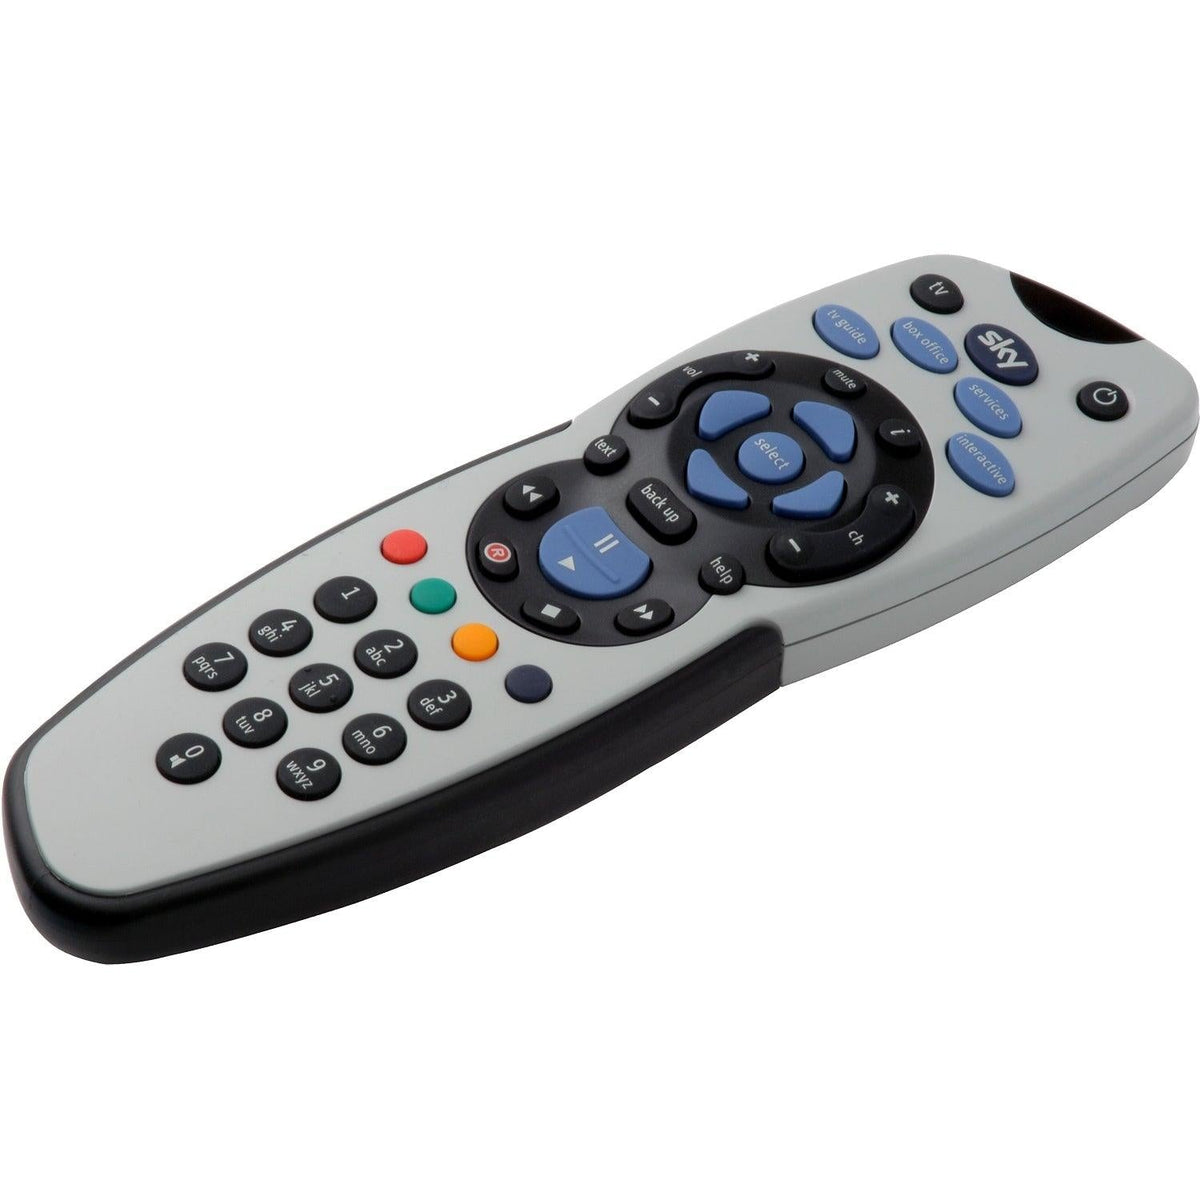 Sky Plus TV Remote Control - Grey | SKY111 from DID Electrical - guaranteed Irish, guaranteed quality service. (6890731569340)